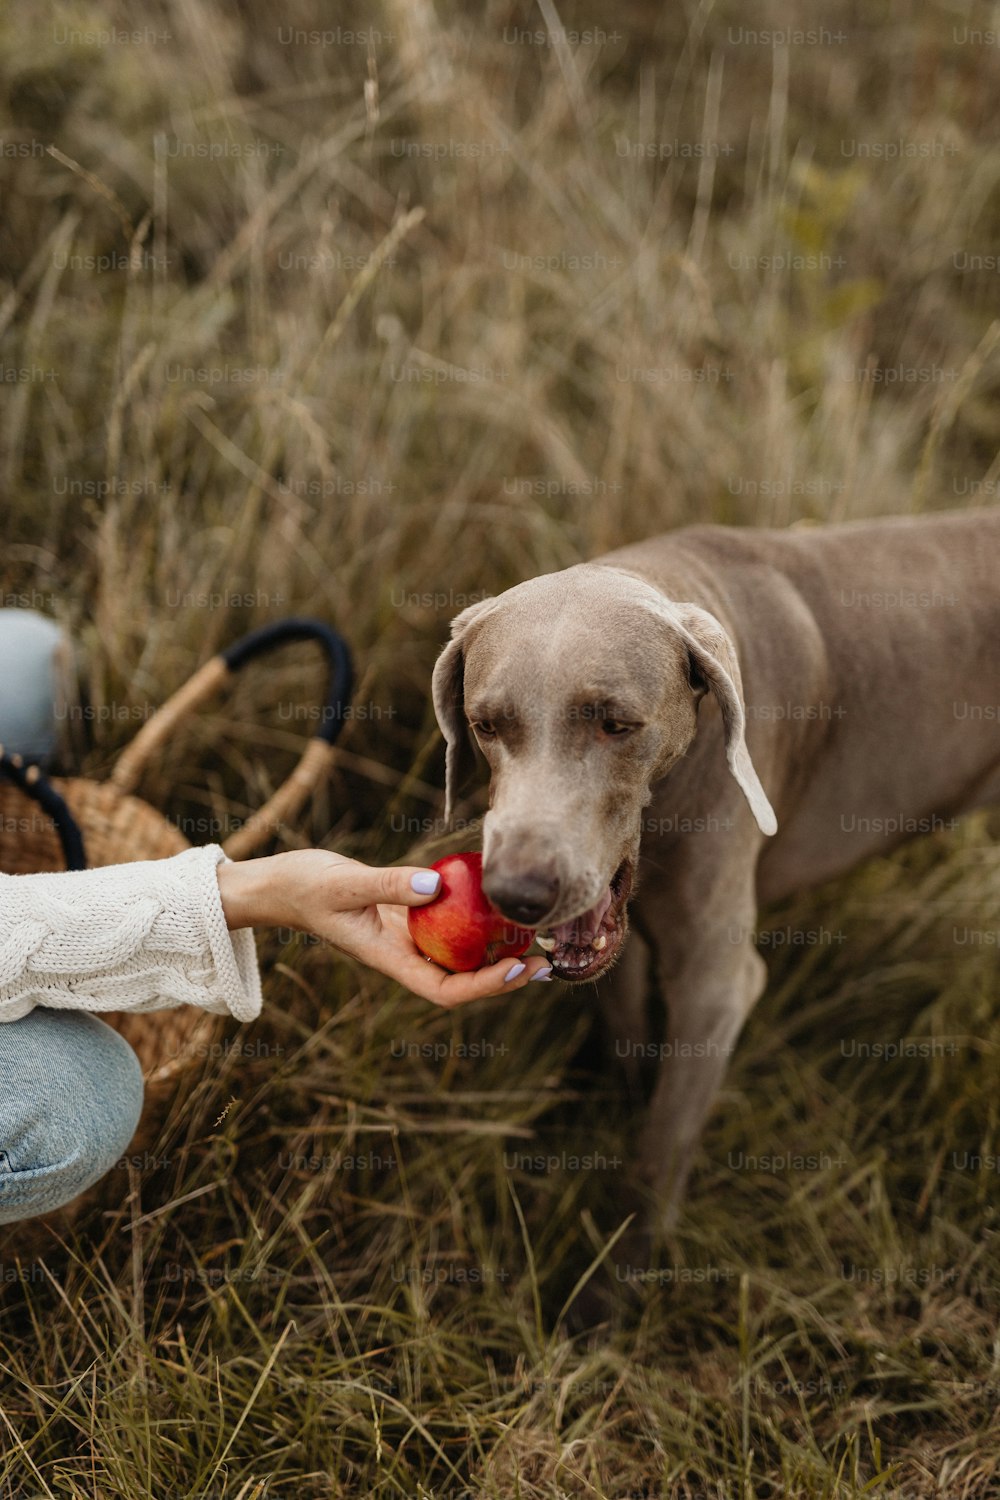 a person feeding a dog an apple in a field